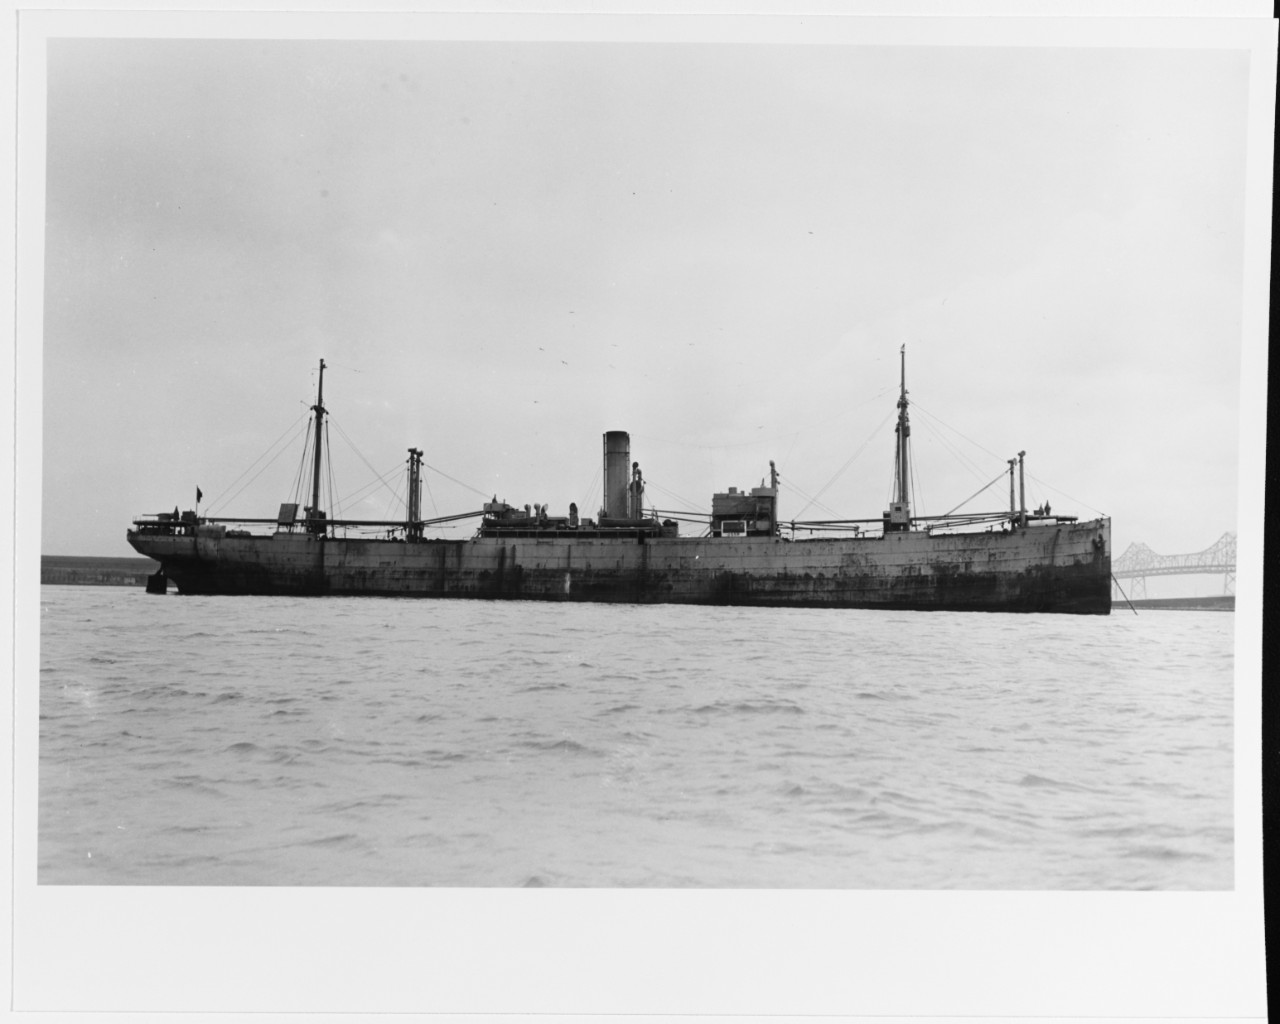 S.S. SUKHONA (U.S.S.R. Merchant Cargo Ship, 1912-1948, under this name 1943-1944)